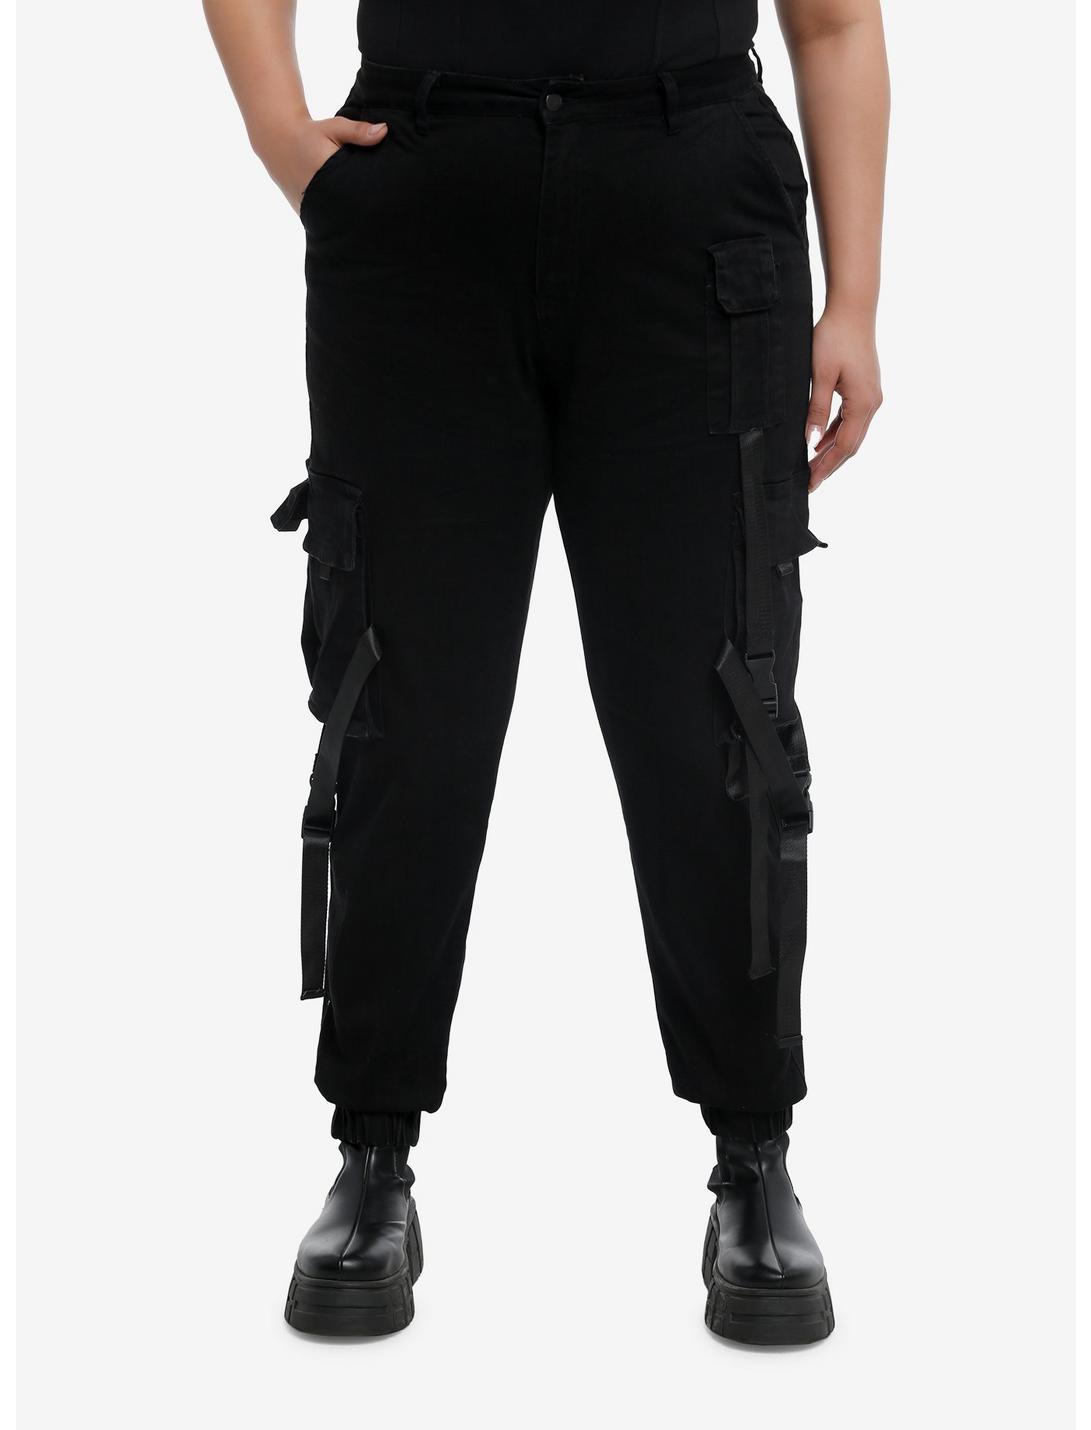 Black Denim Cargo Pockets & Straps Girls Jogger Pants Plus Size, BLACK, hi-res